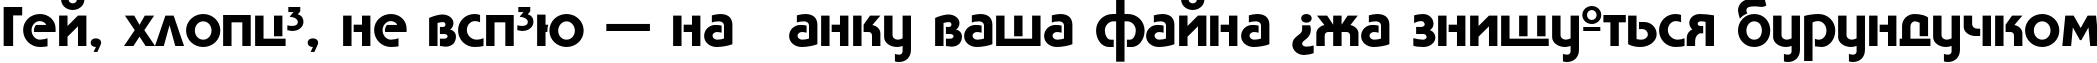 Пример написания шрифтом Tavrida текста на украинском